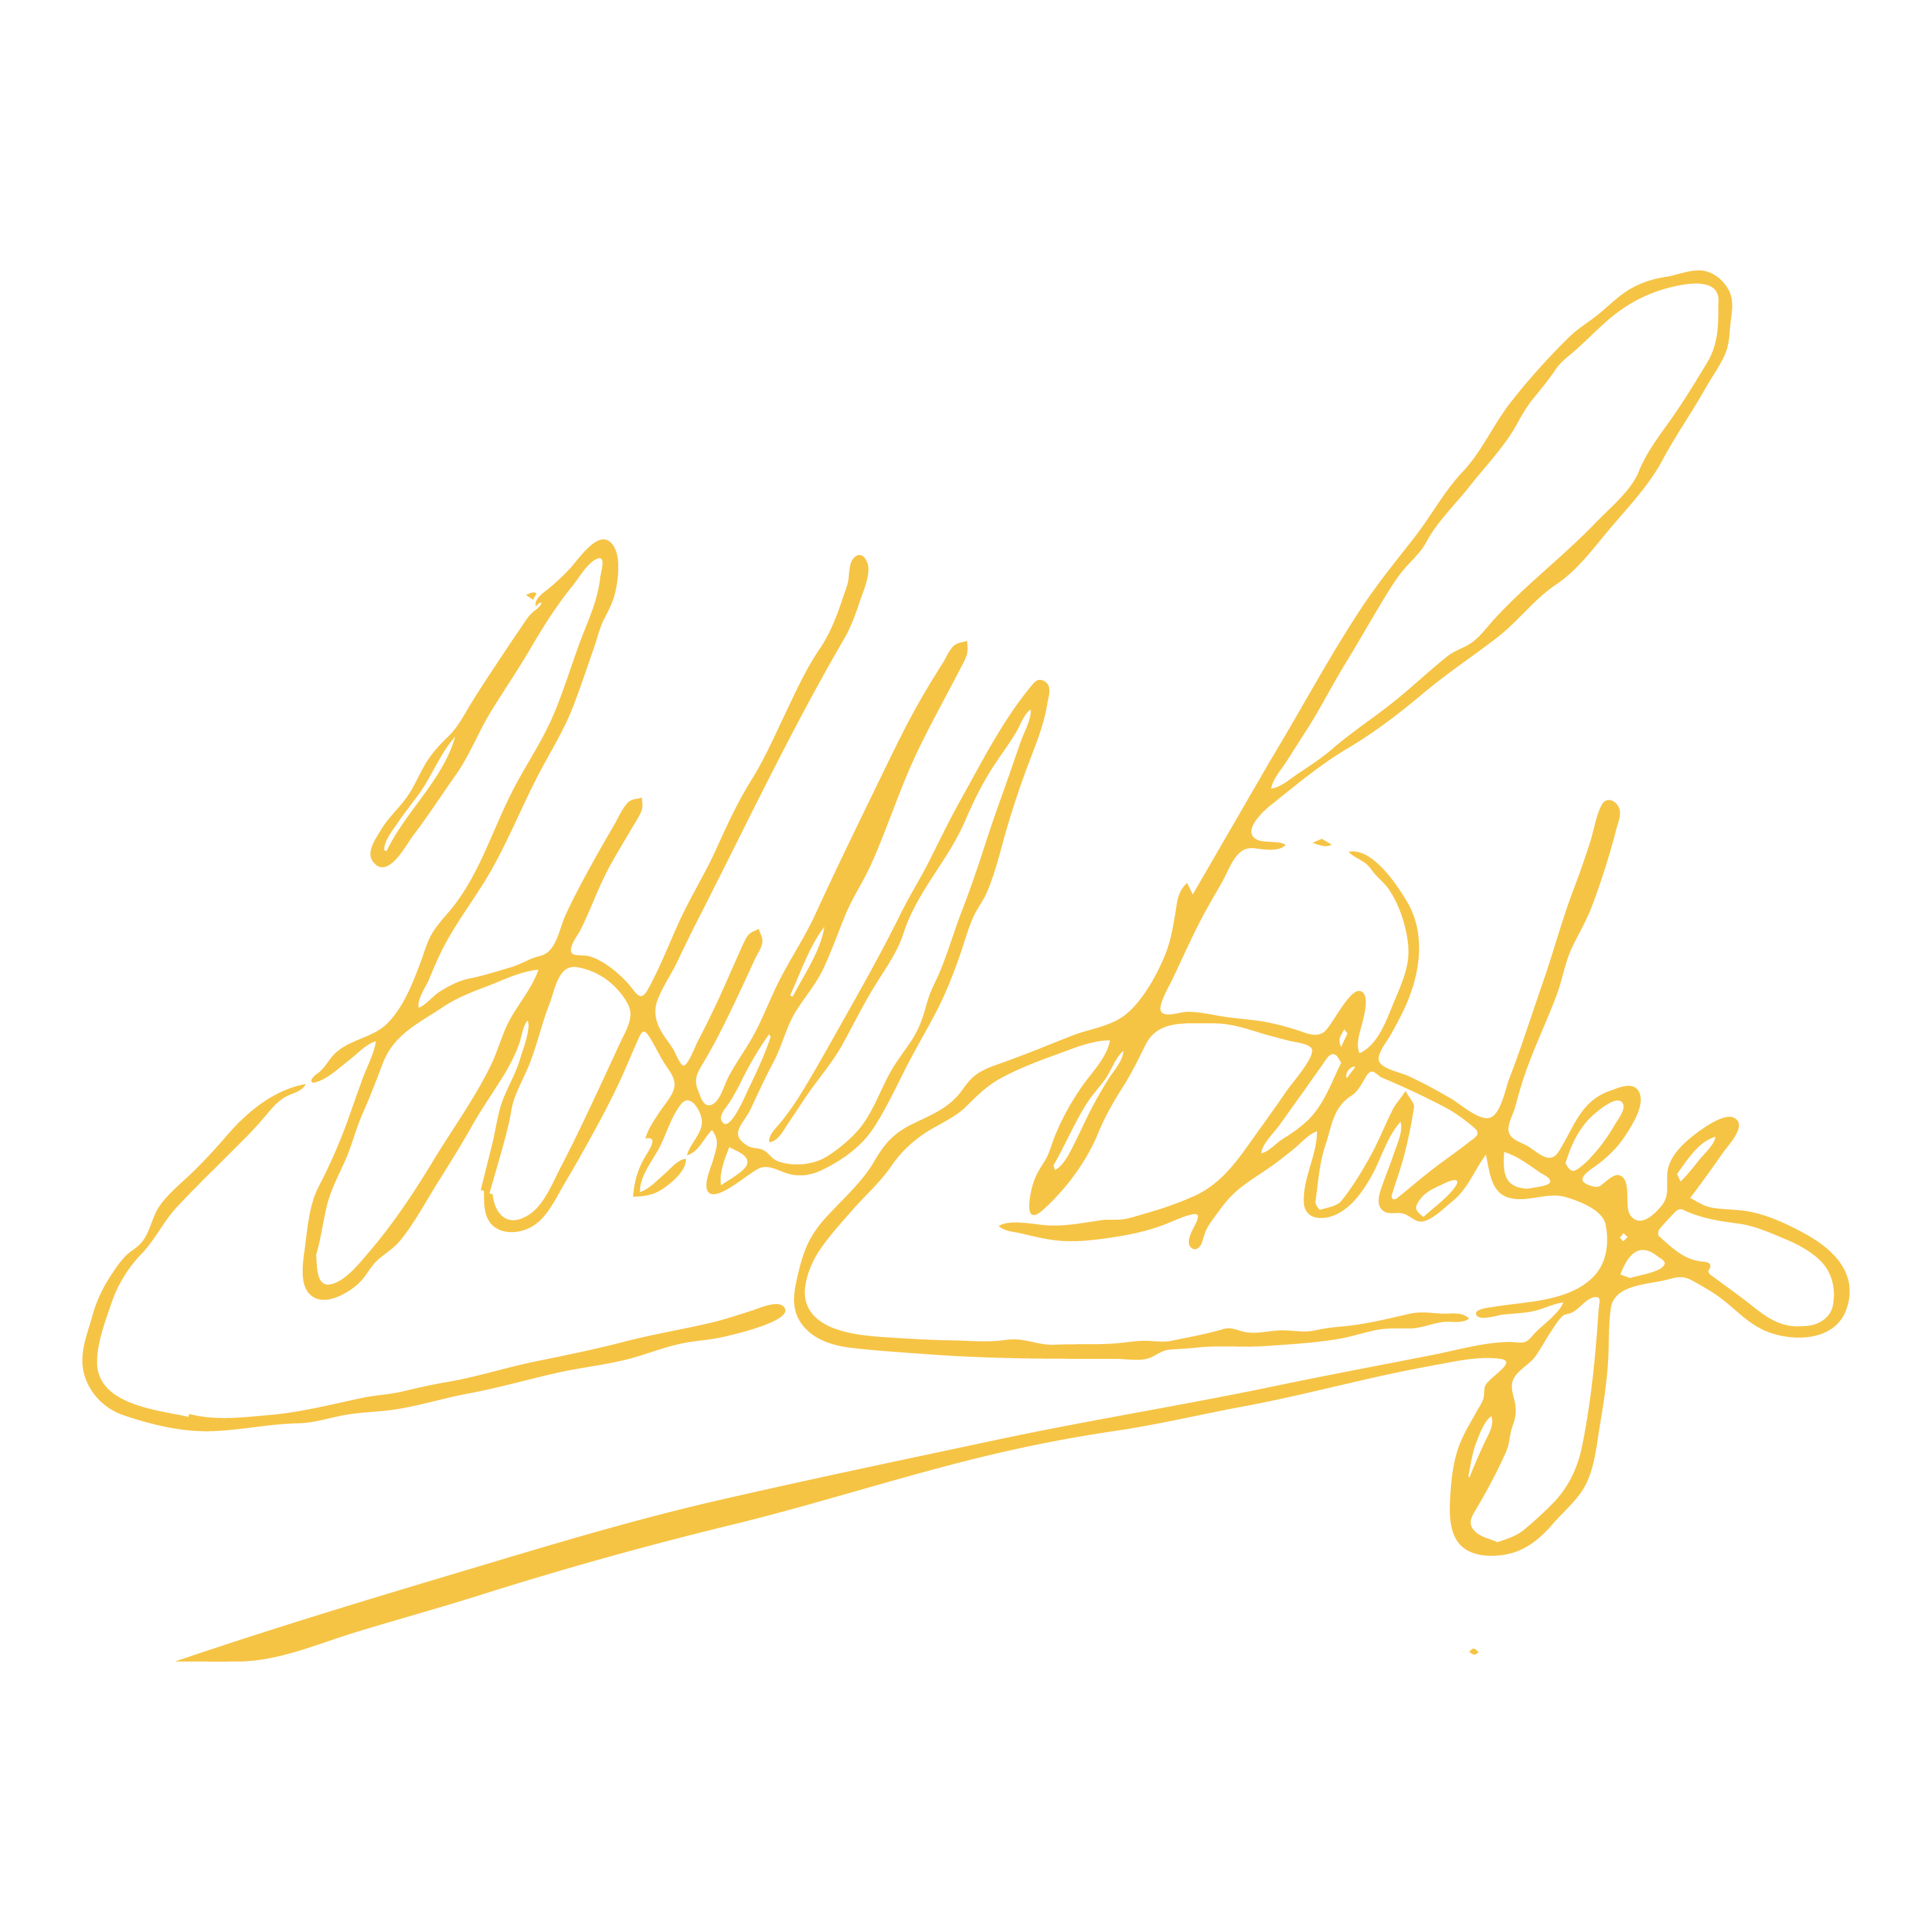 will bridges missionary signature in yellow